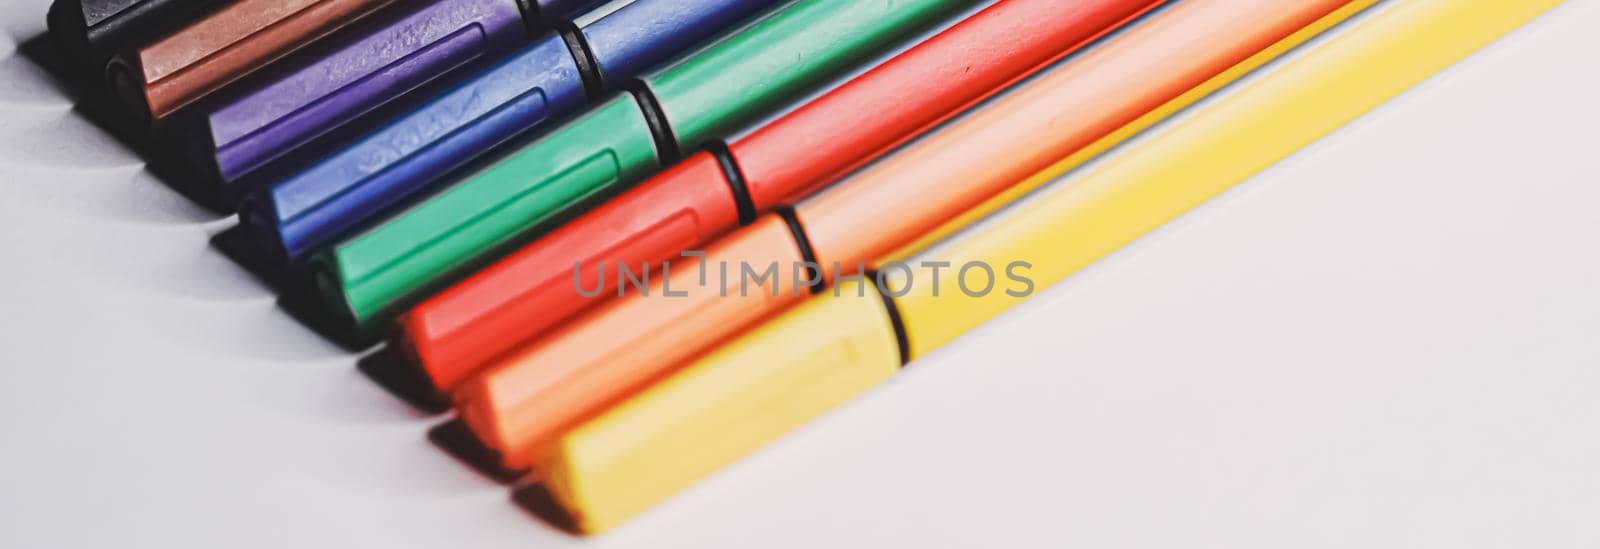 Colourful felt-tip pens for drawing, closeup